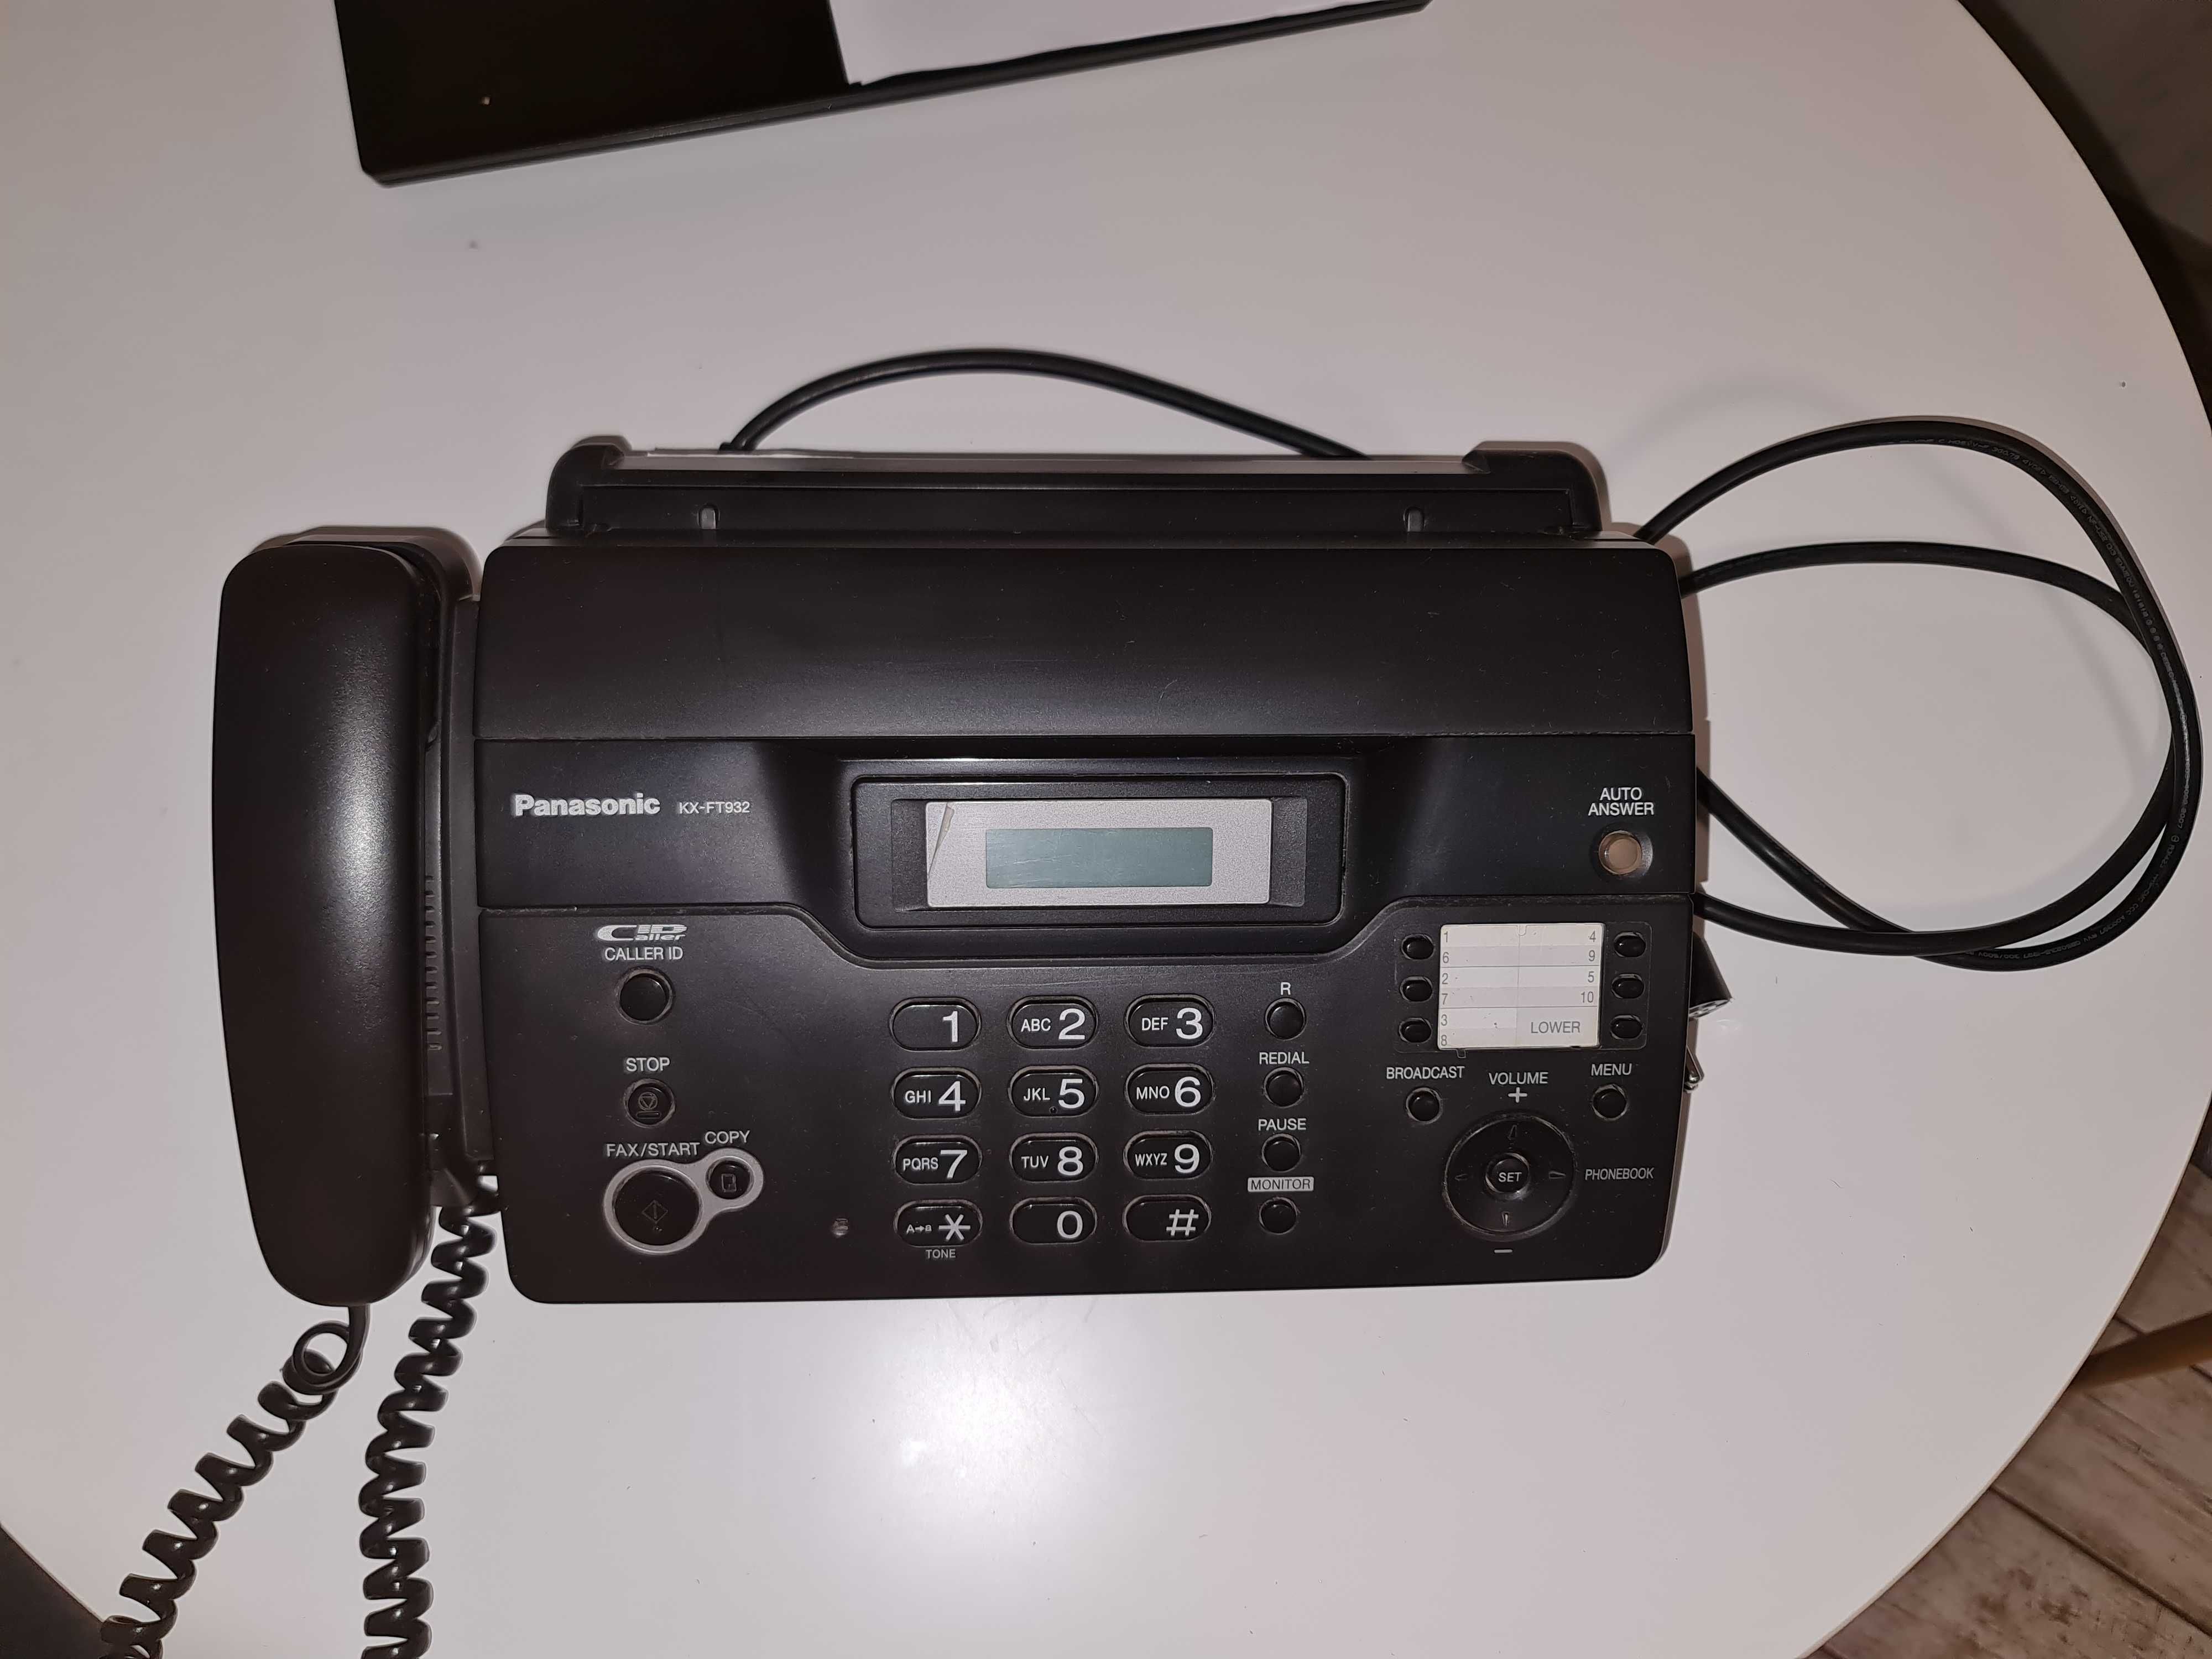 Panasonic KX-FT932 - telefon/fax/robot telefonic – cu hartie termica